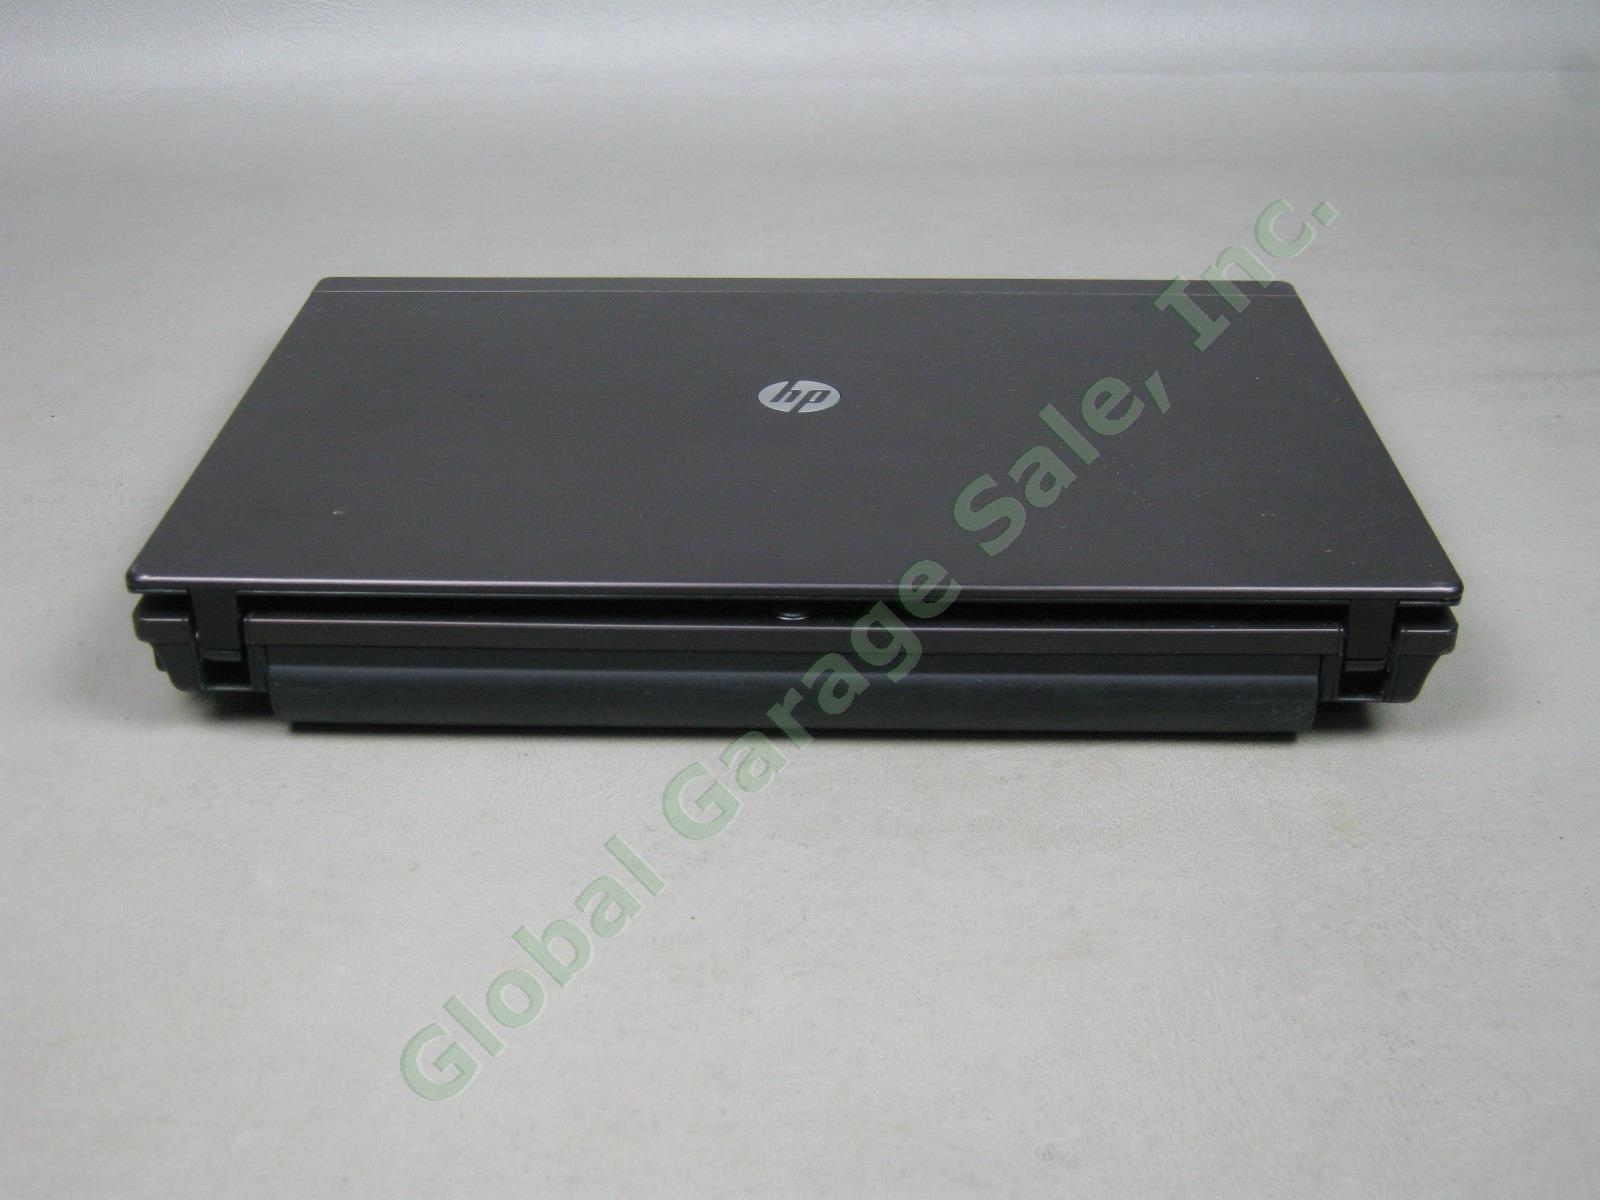 HP Mini 5103 10.1" Netbook Laptop Intel Atom 1.83GHz 2GB RAM 160GB HDD Windows 7 6